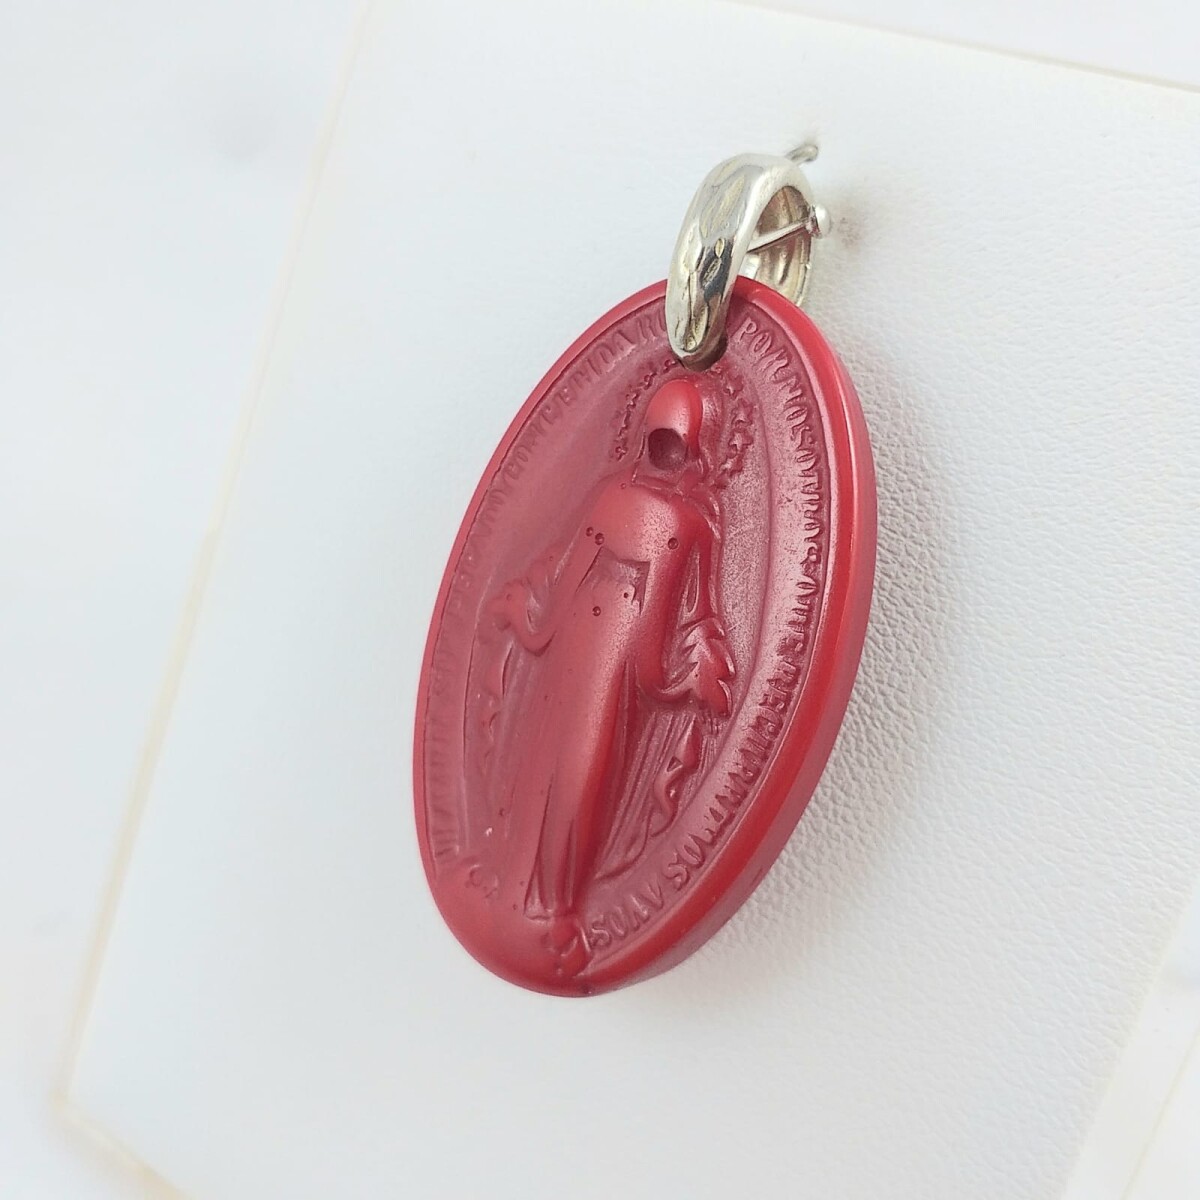 Medalla religiosa resina color rojo Virgen Milagrosa, medidas 4cm*2.5cm, argolla de plata 925. 